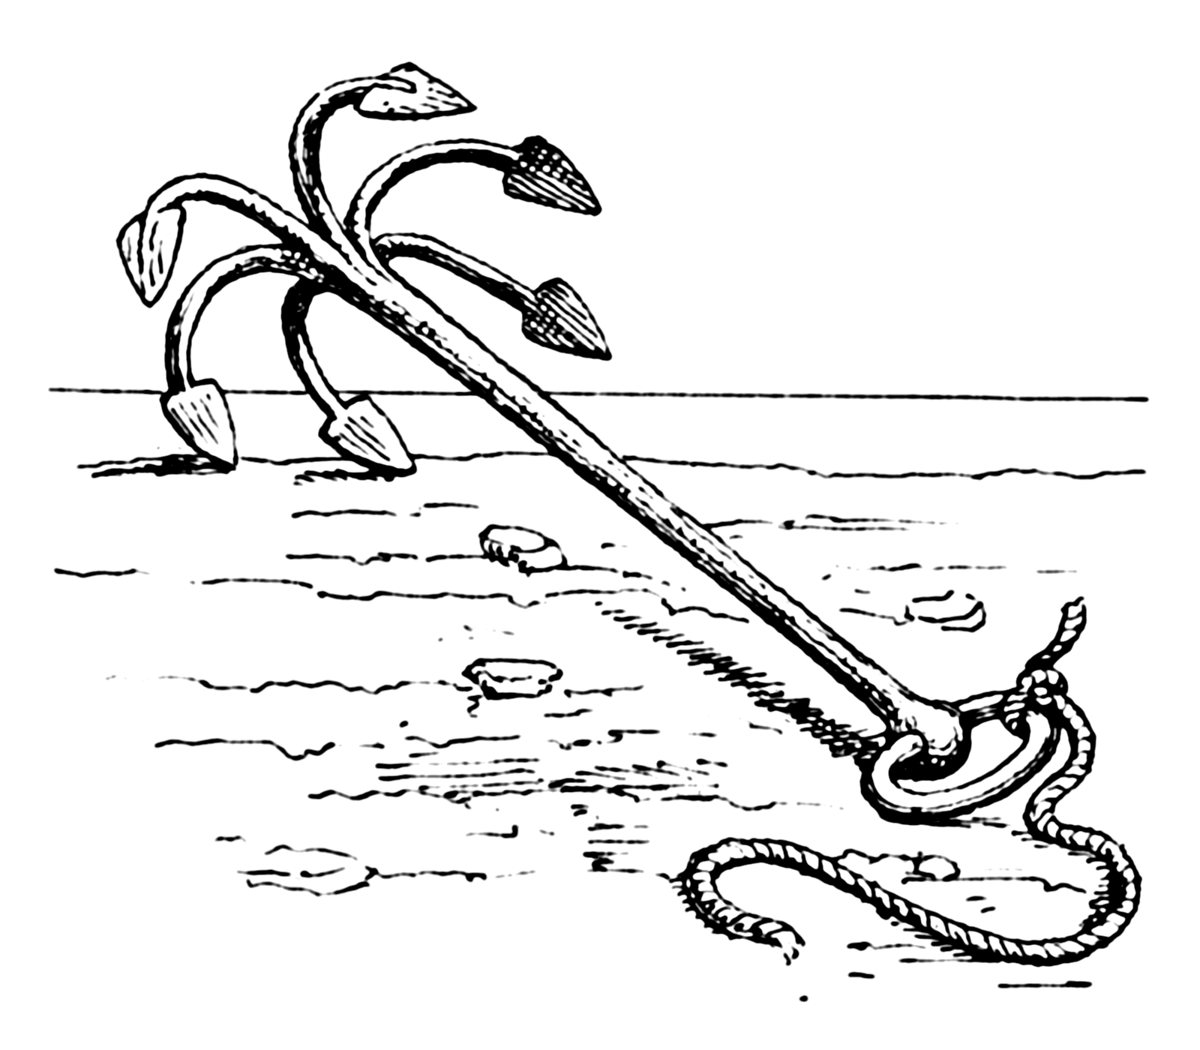 Grappling hook - Simple English Wikipedia, the free encyclopedia